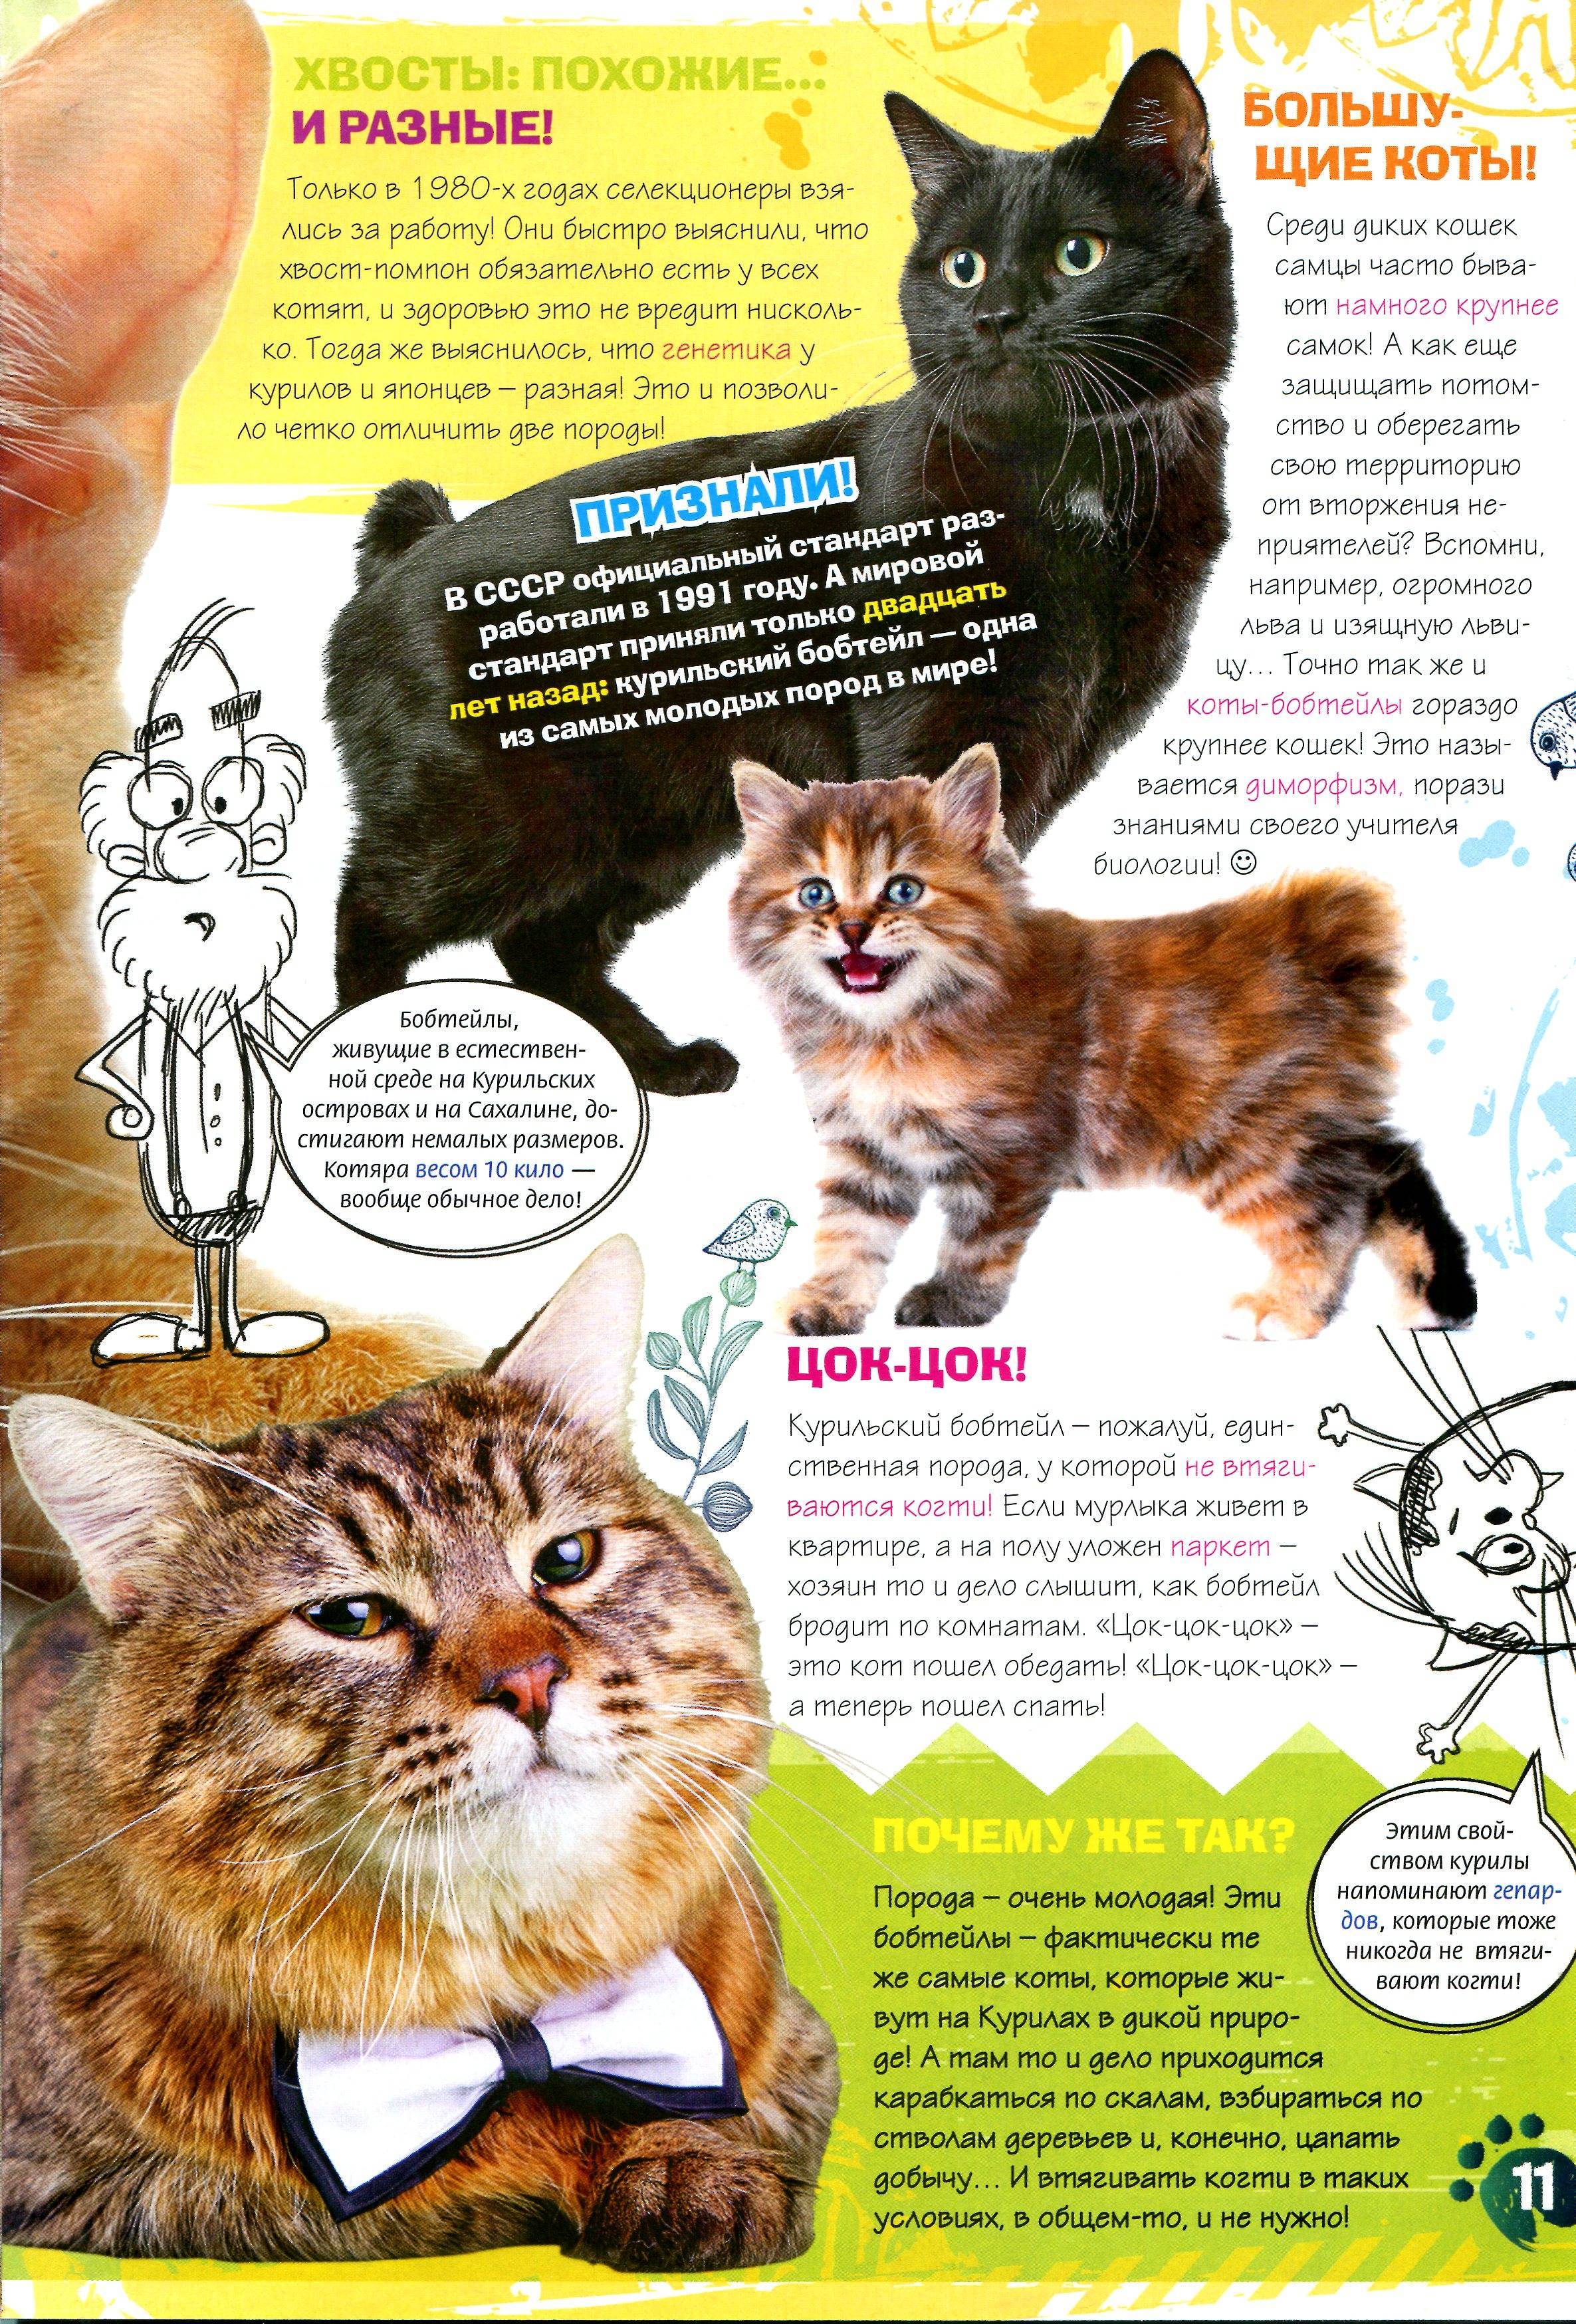 Кошки курильские бобтейлы: описание, уход, стандарты